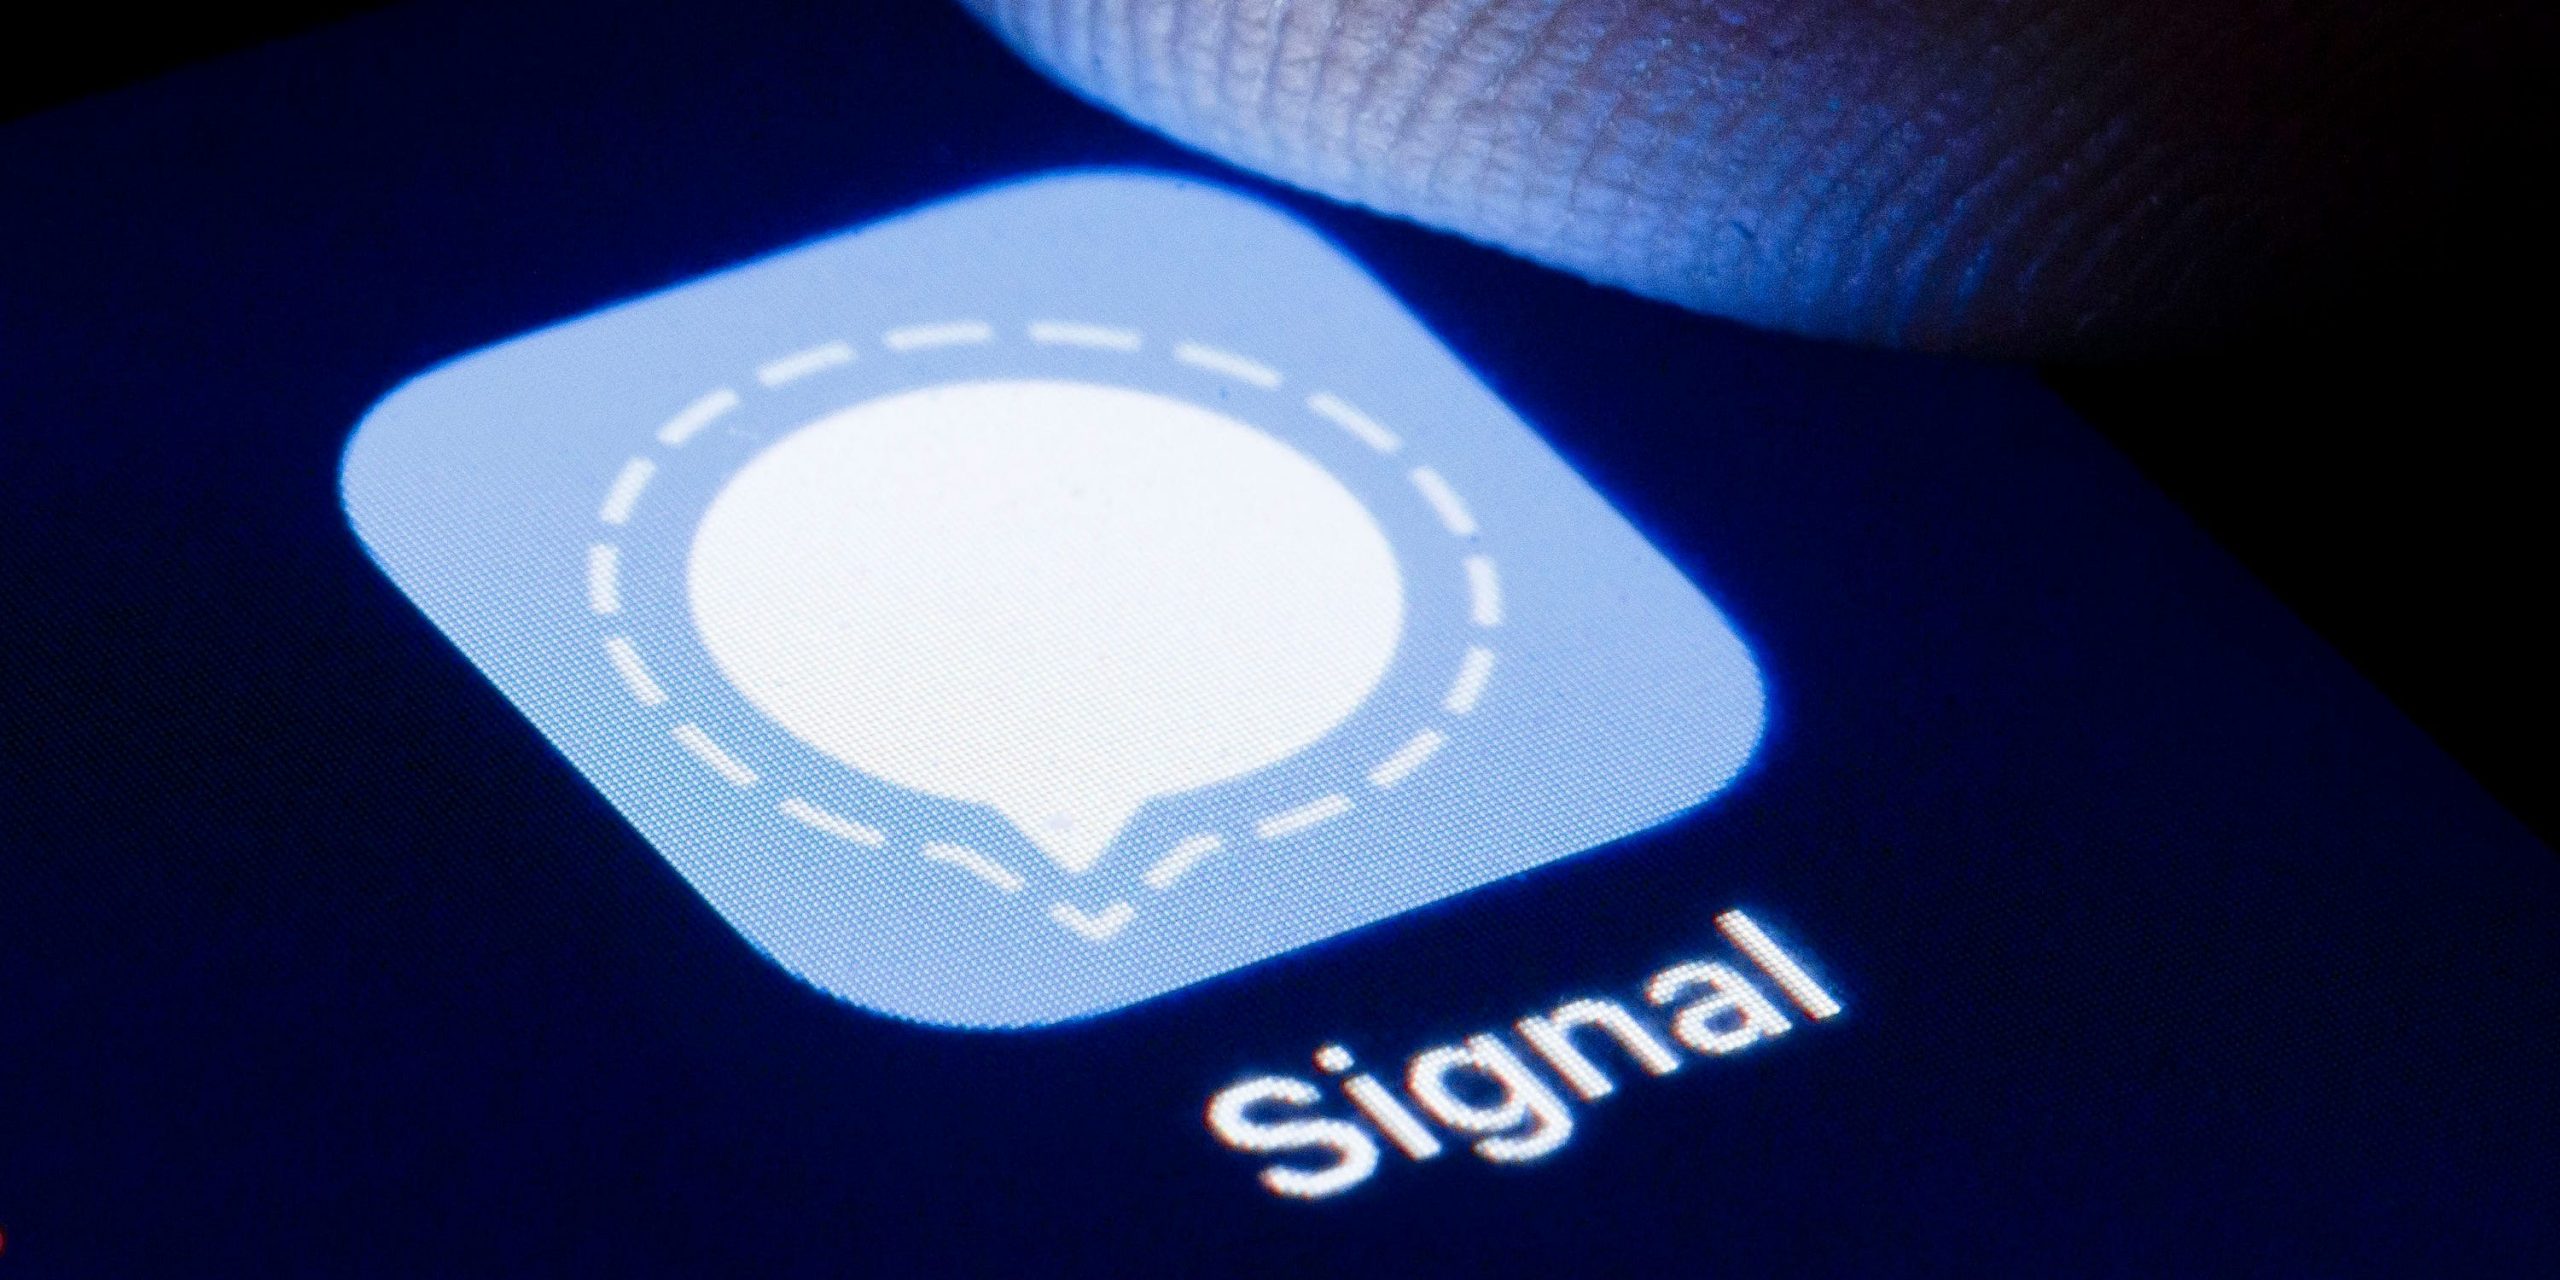 signal sms